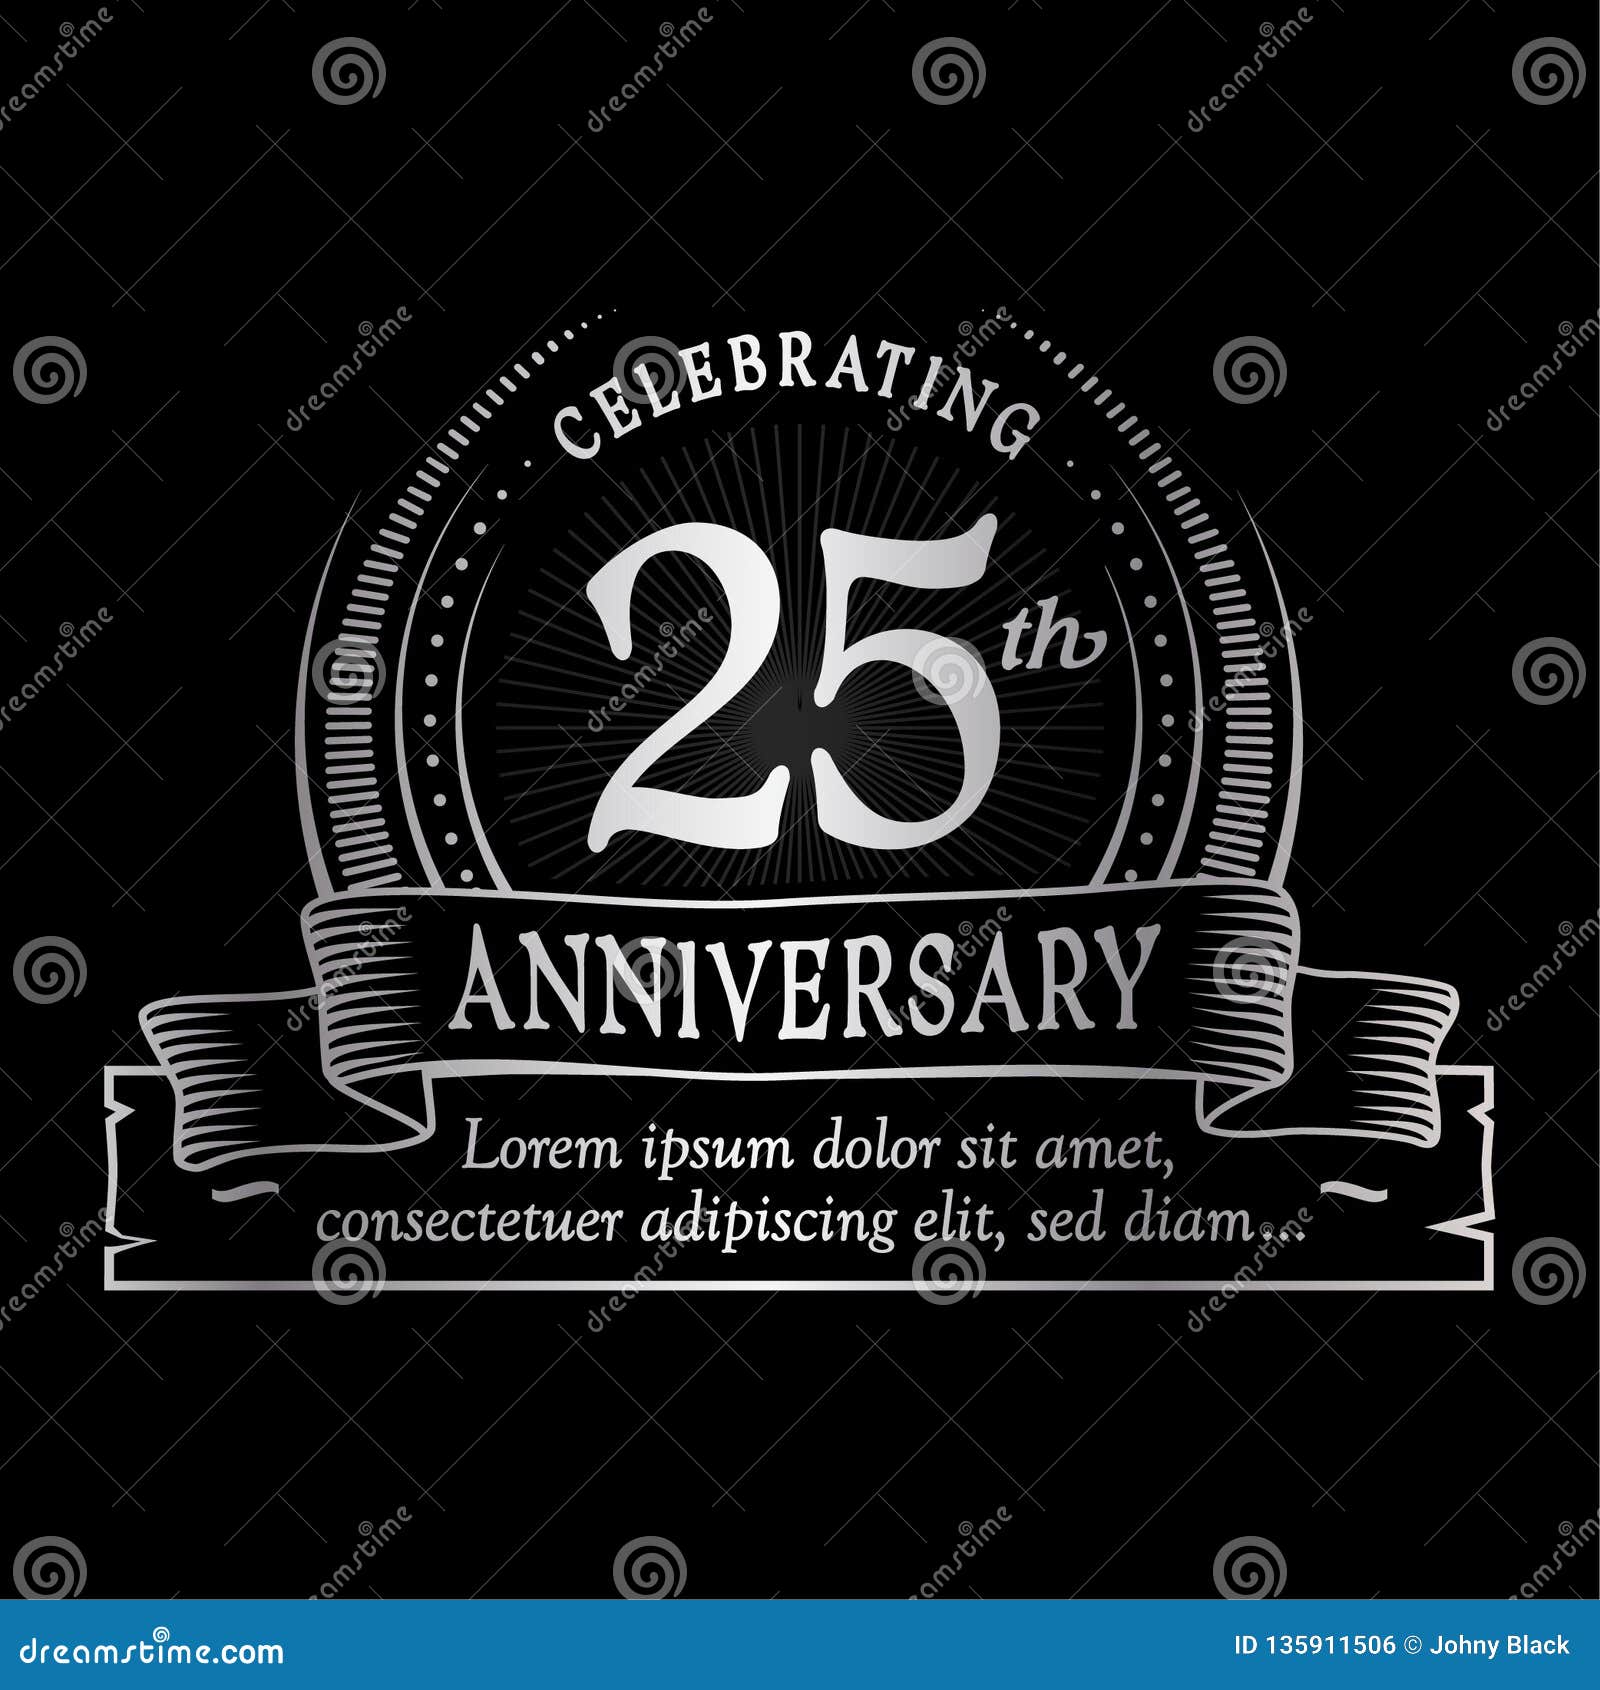 25th Anniversary Design Template 25 Years Logo Twenty Five Years Vector And Illustration Stock Vector Illustration Of Birthday Celebrating